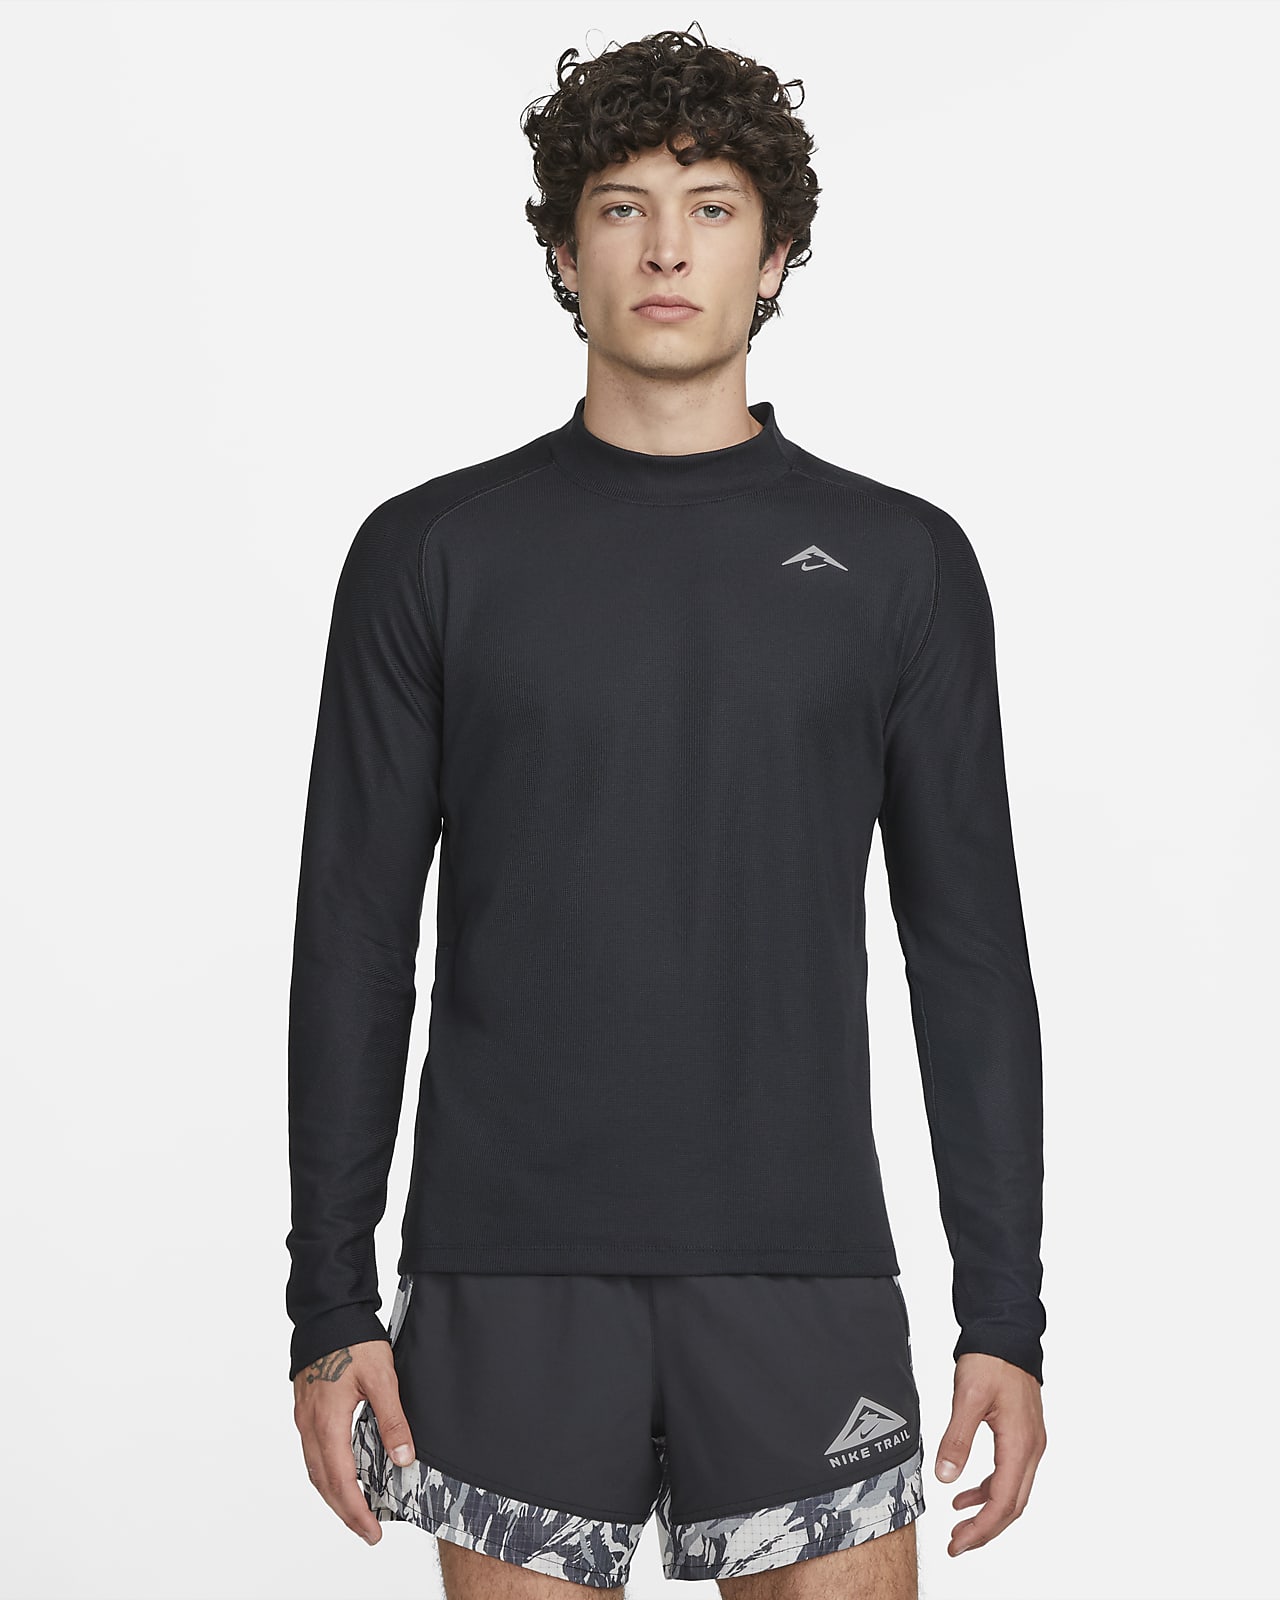 Nike Shirt Turtleneck Top White Workout Dri-Fit Long Sleeve Adult